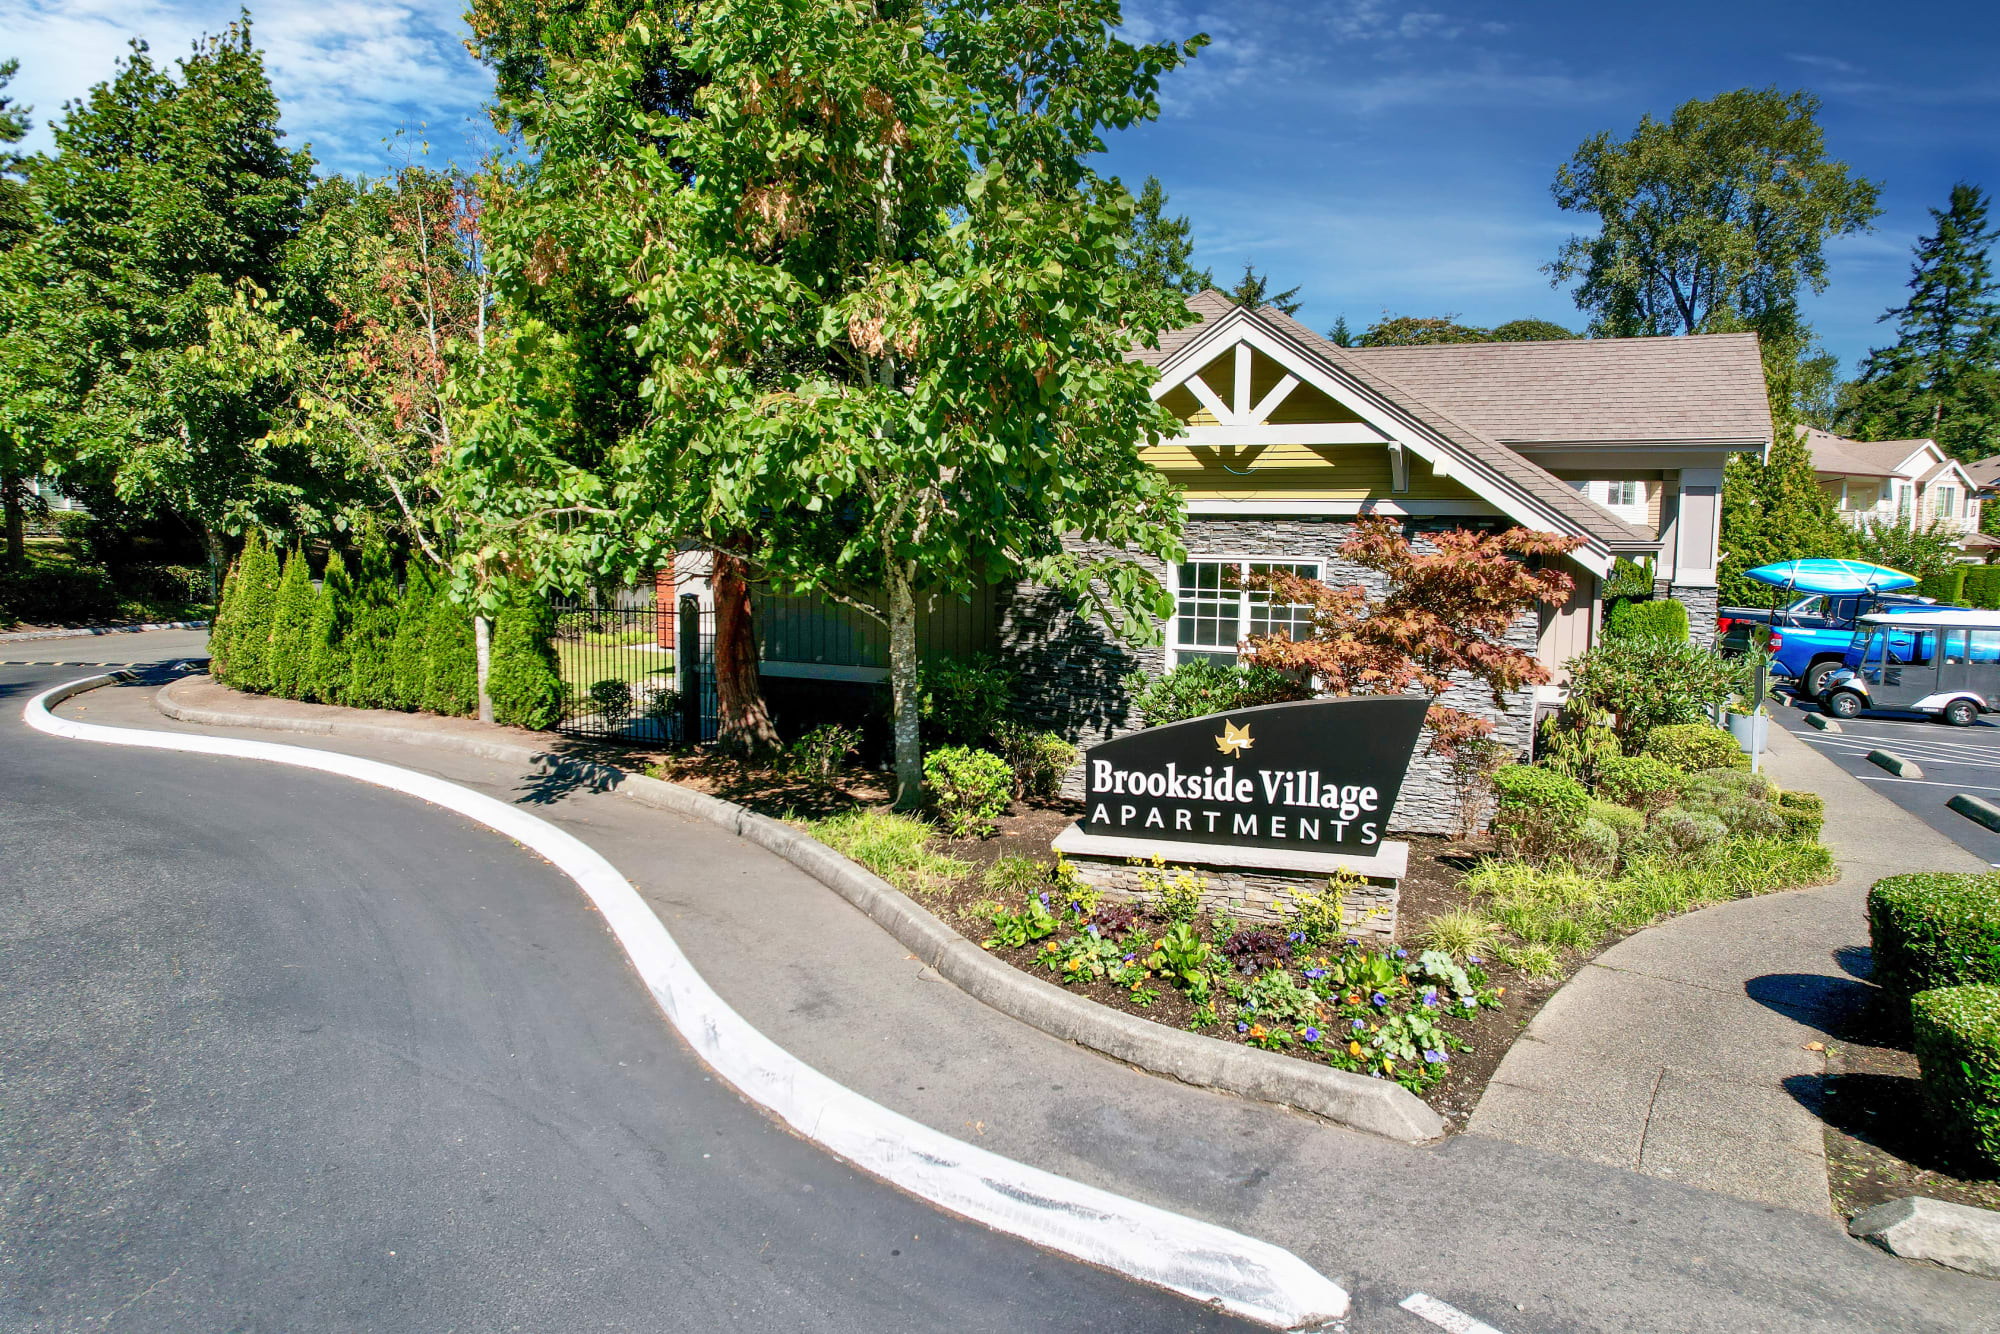 Leasing office entrance at Brookside Village in Auburn, Washington